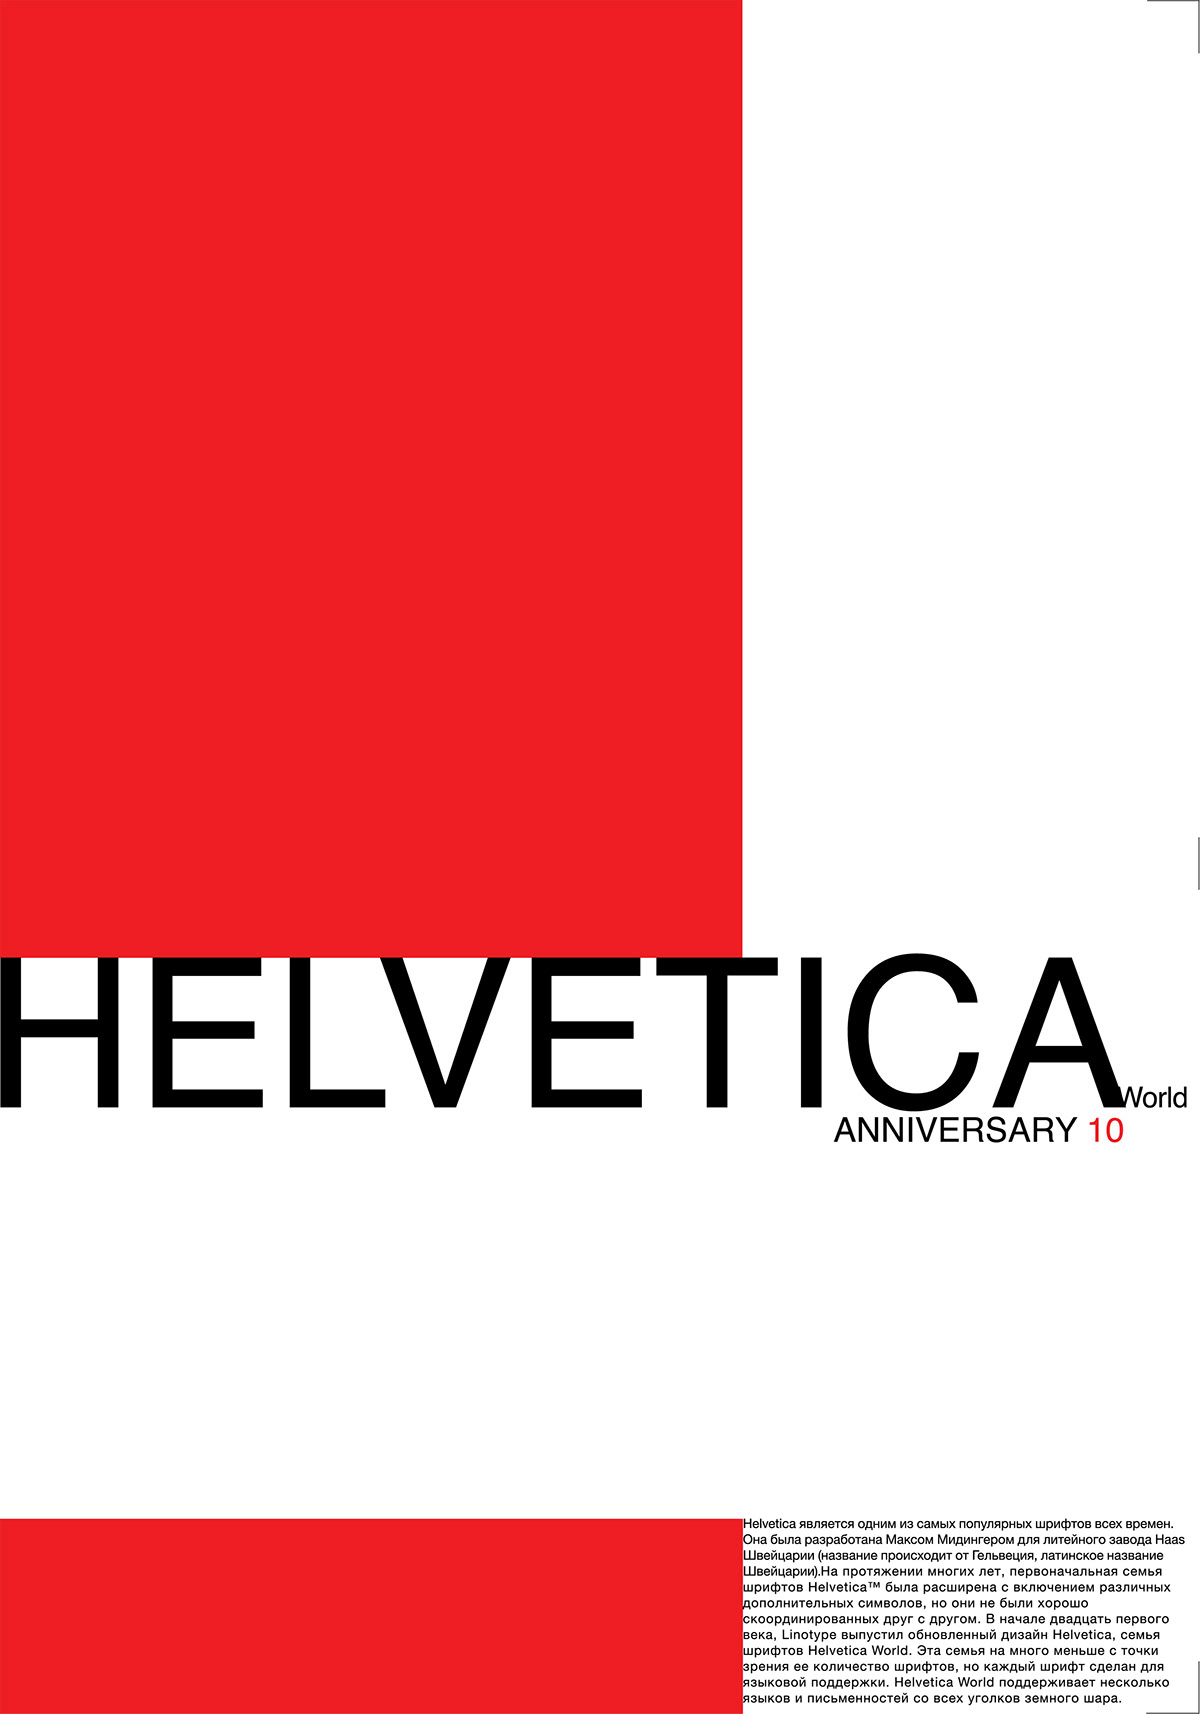 helvetica font poster design graphic minimal modern red White black Exhibition 